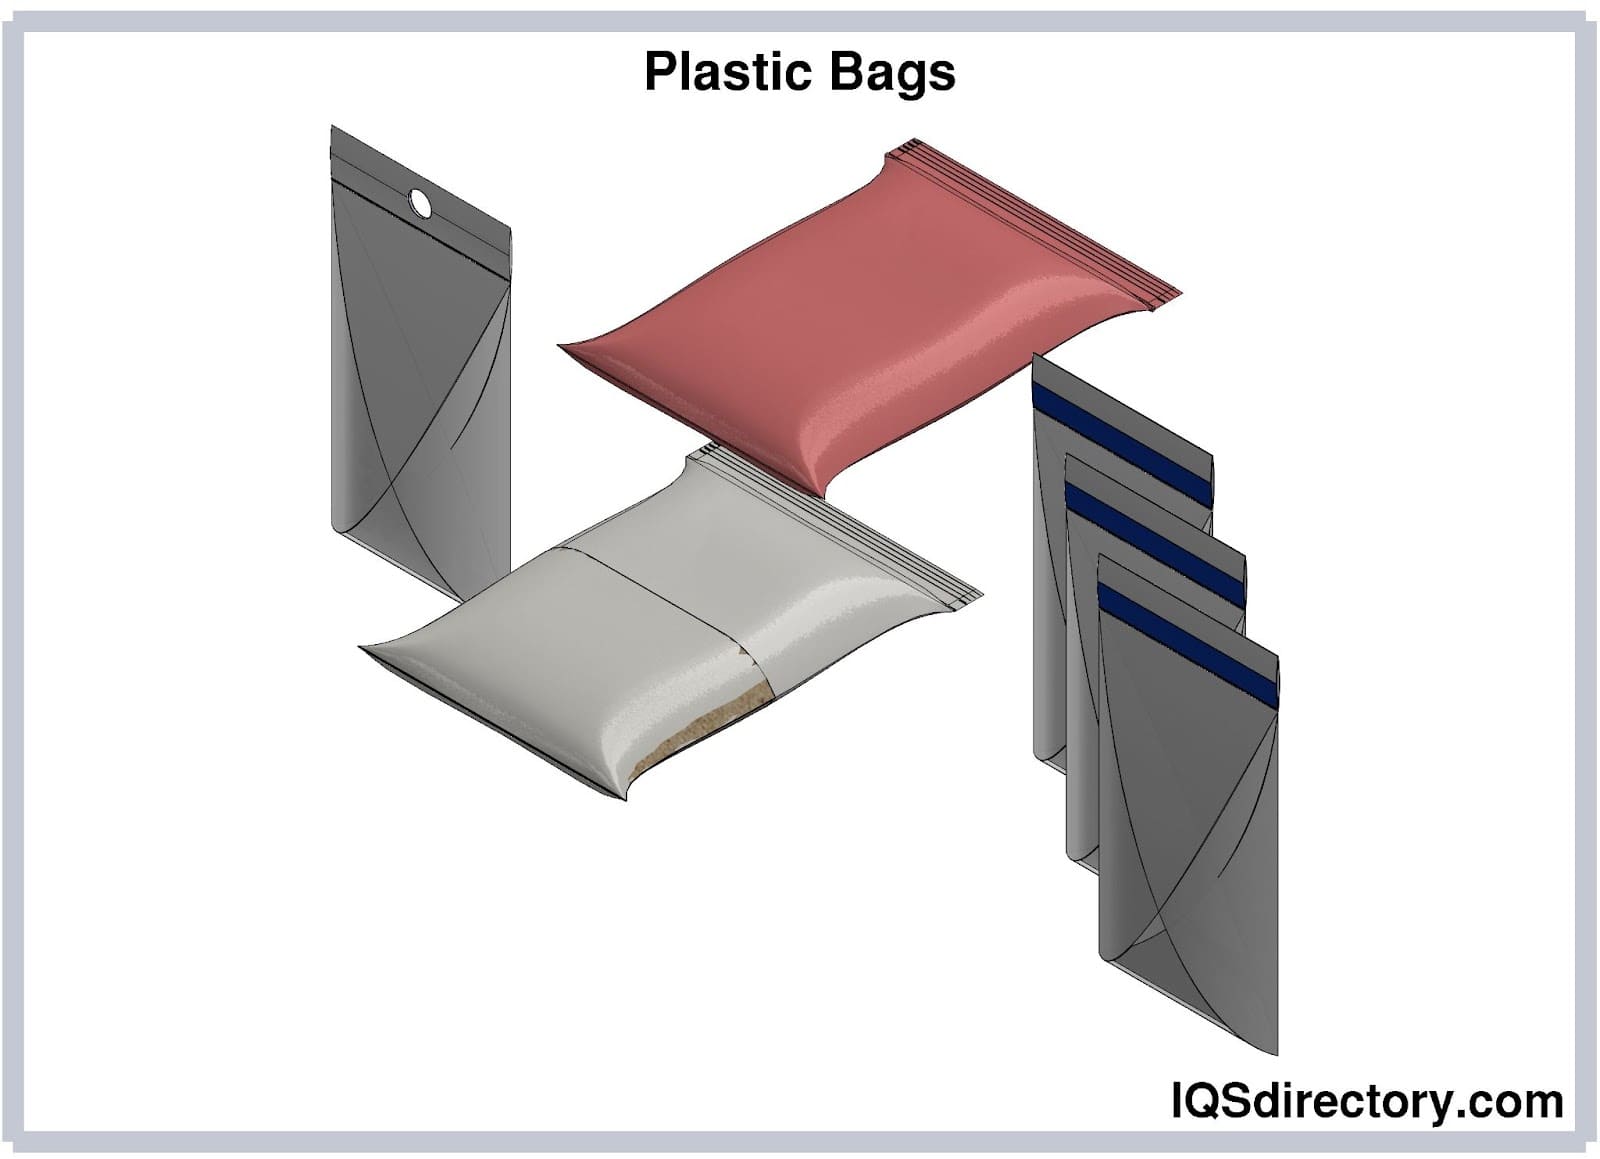 Custom Printed Ziplock Bags: Benefits, and Where to Buy